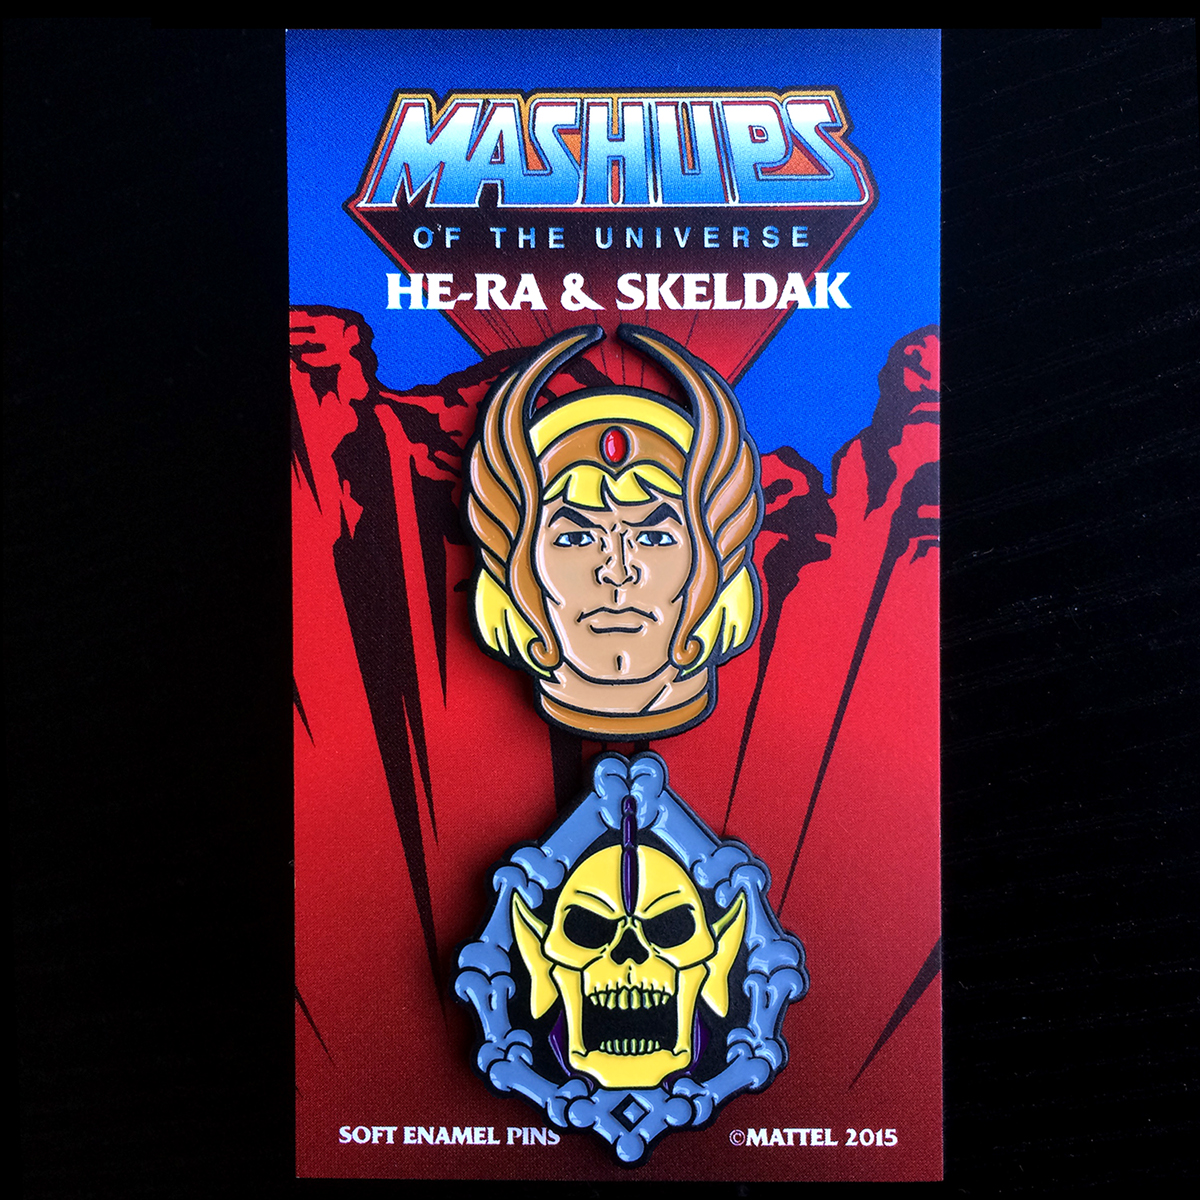 he-man skeletor She-Ra Hordak motu masters of the universe pins Screen-print poster mattel 80s toys TrapJaw